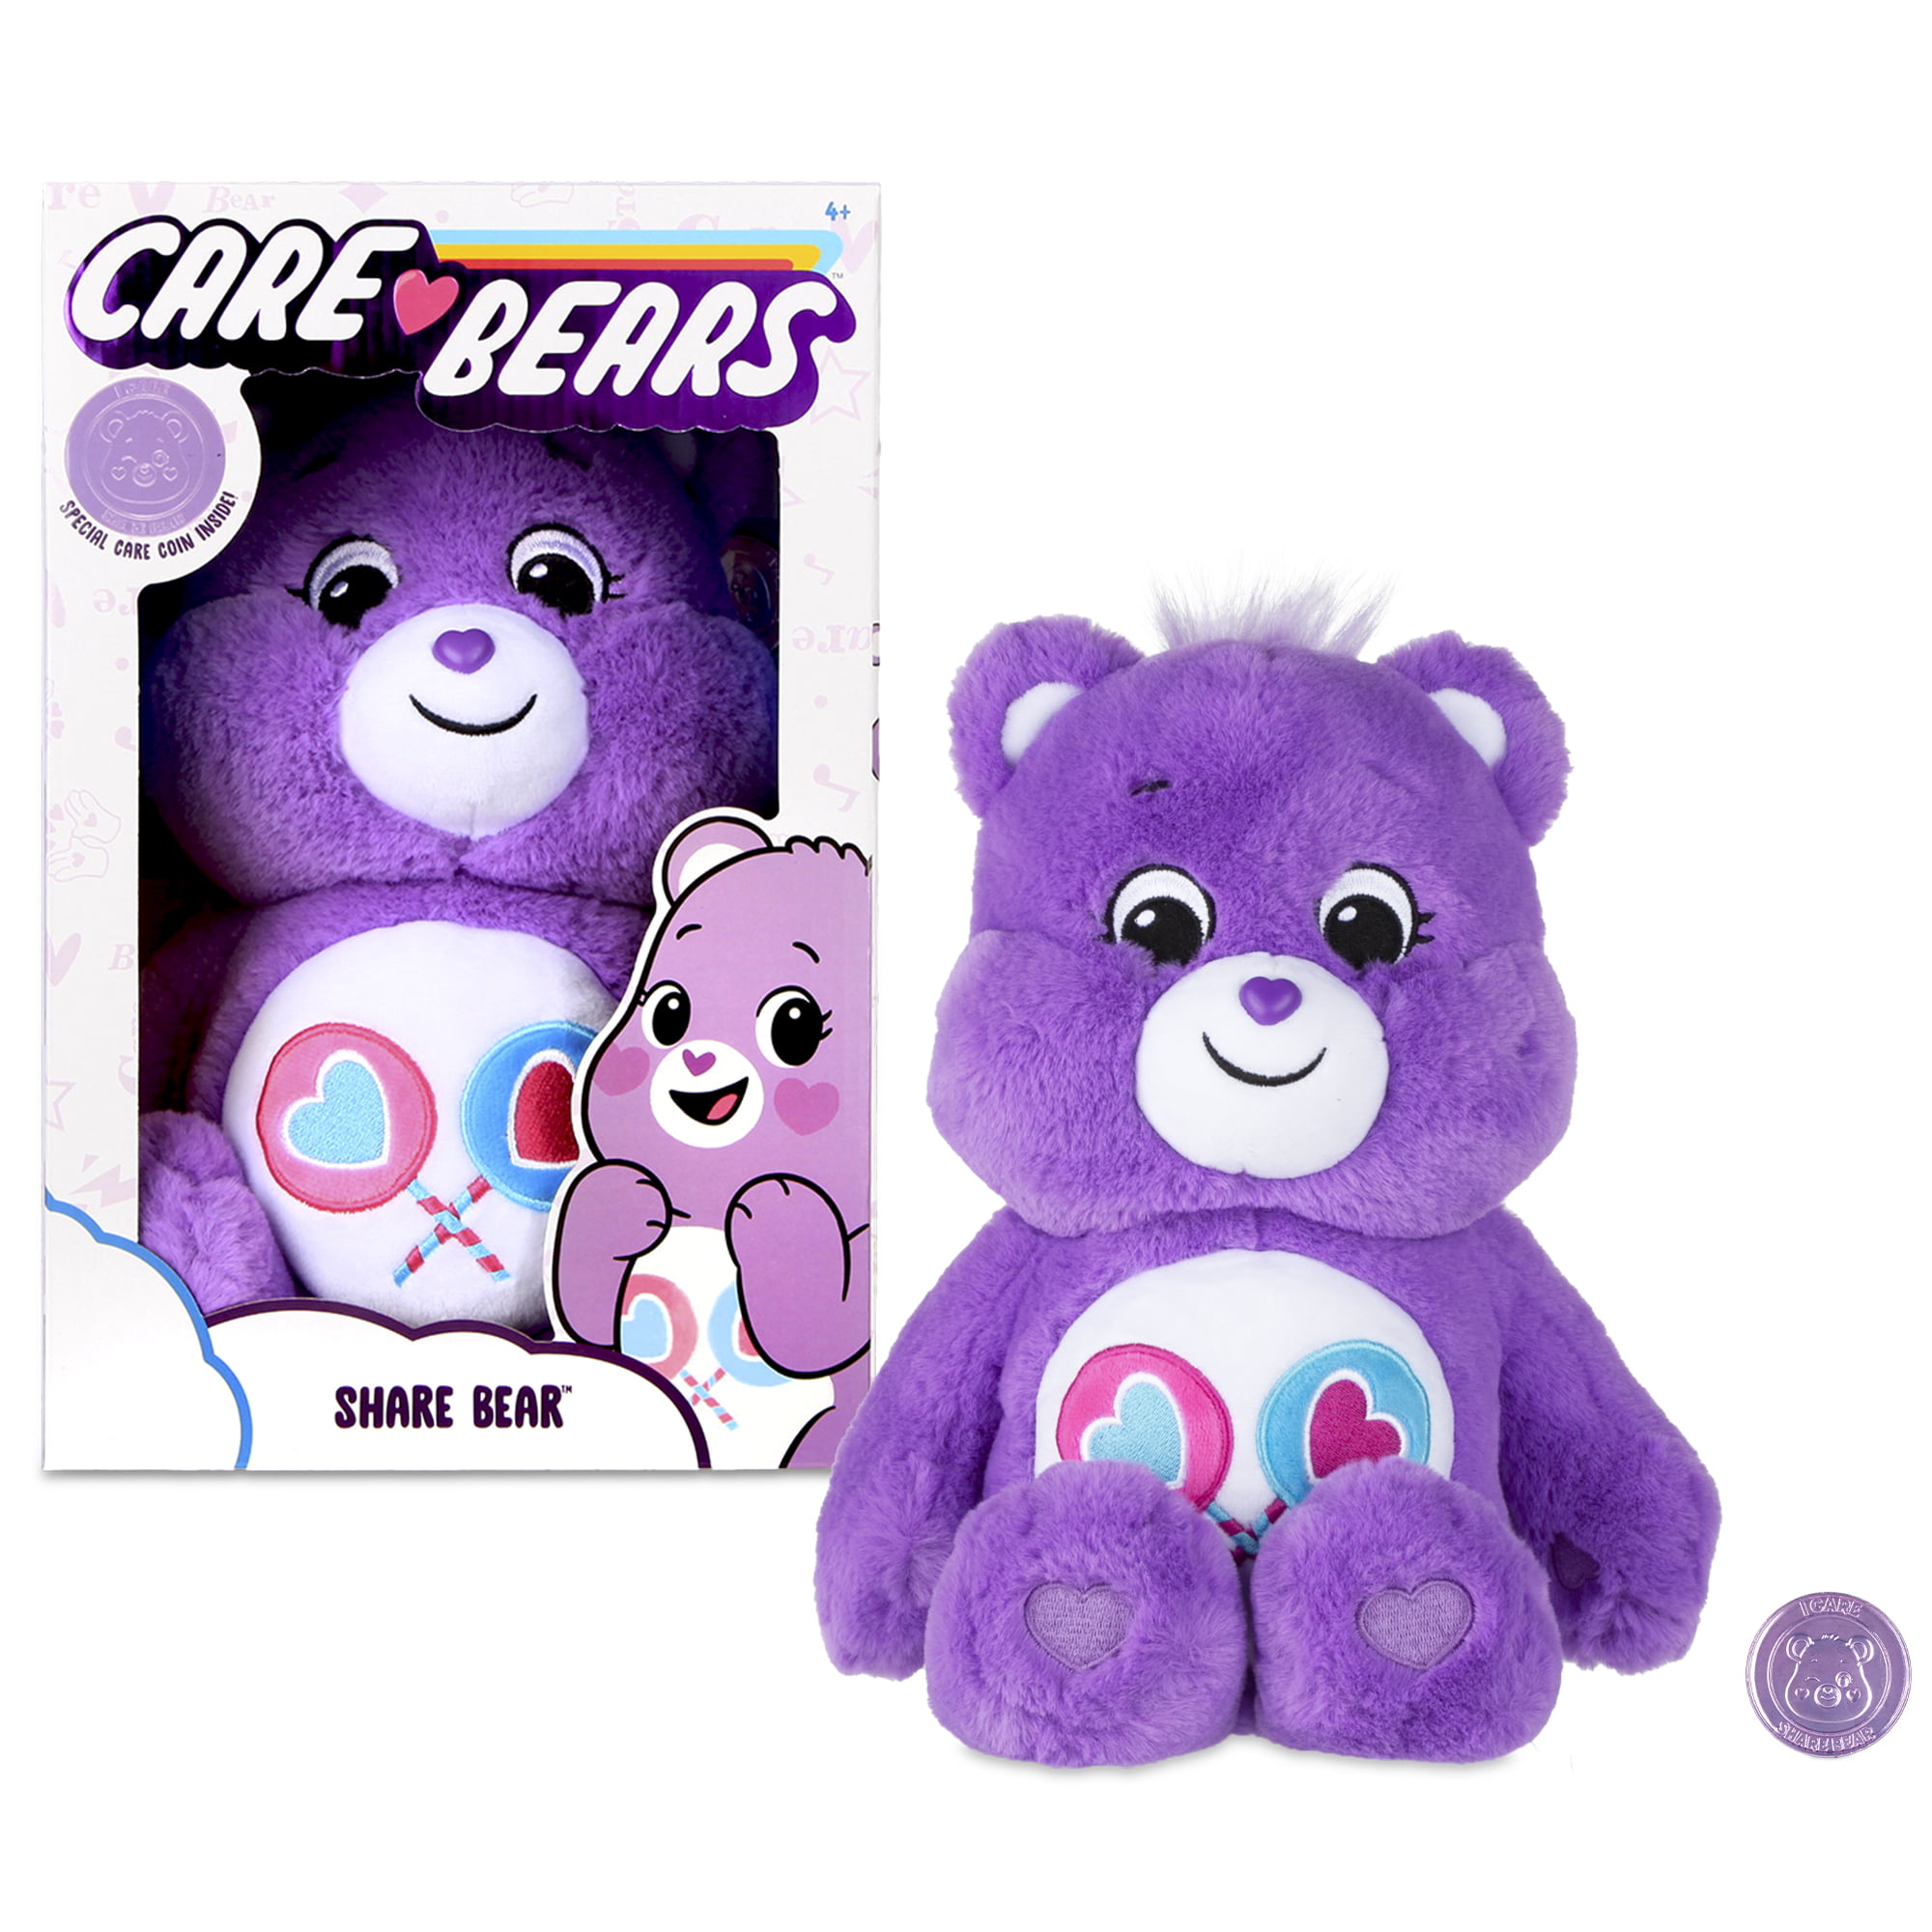 where can i buy care bears